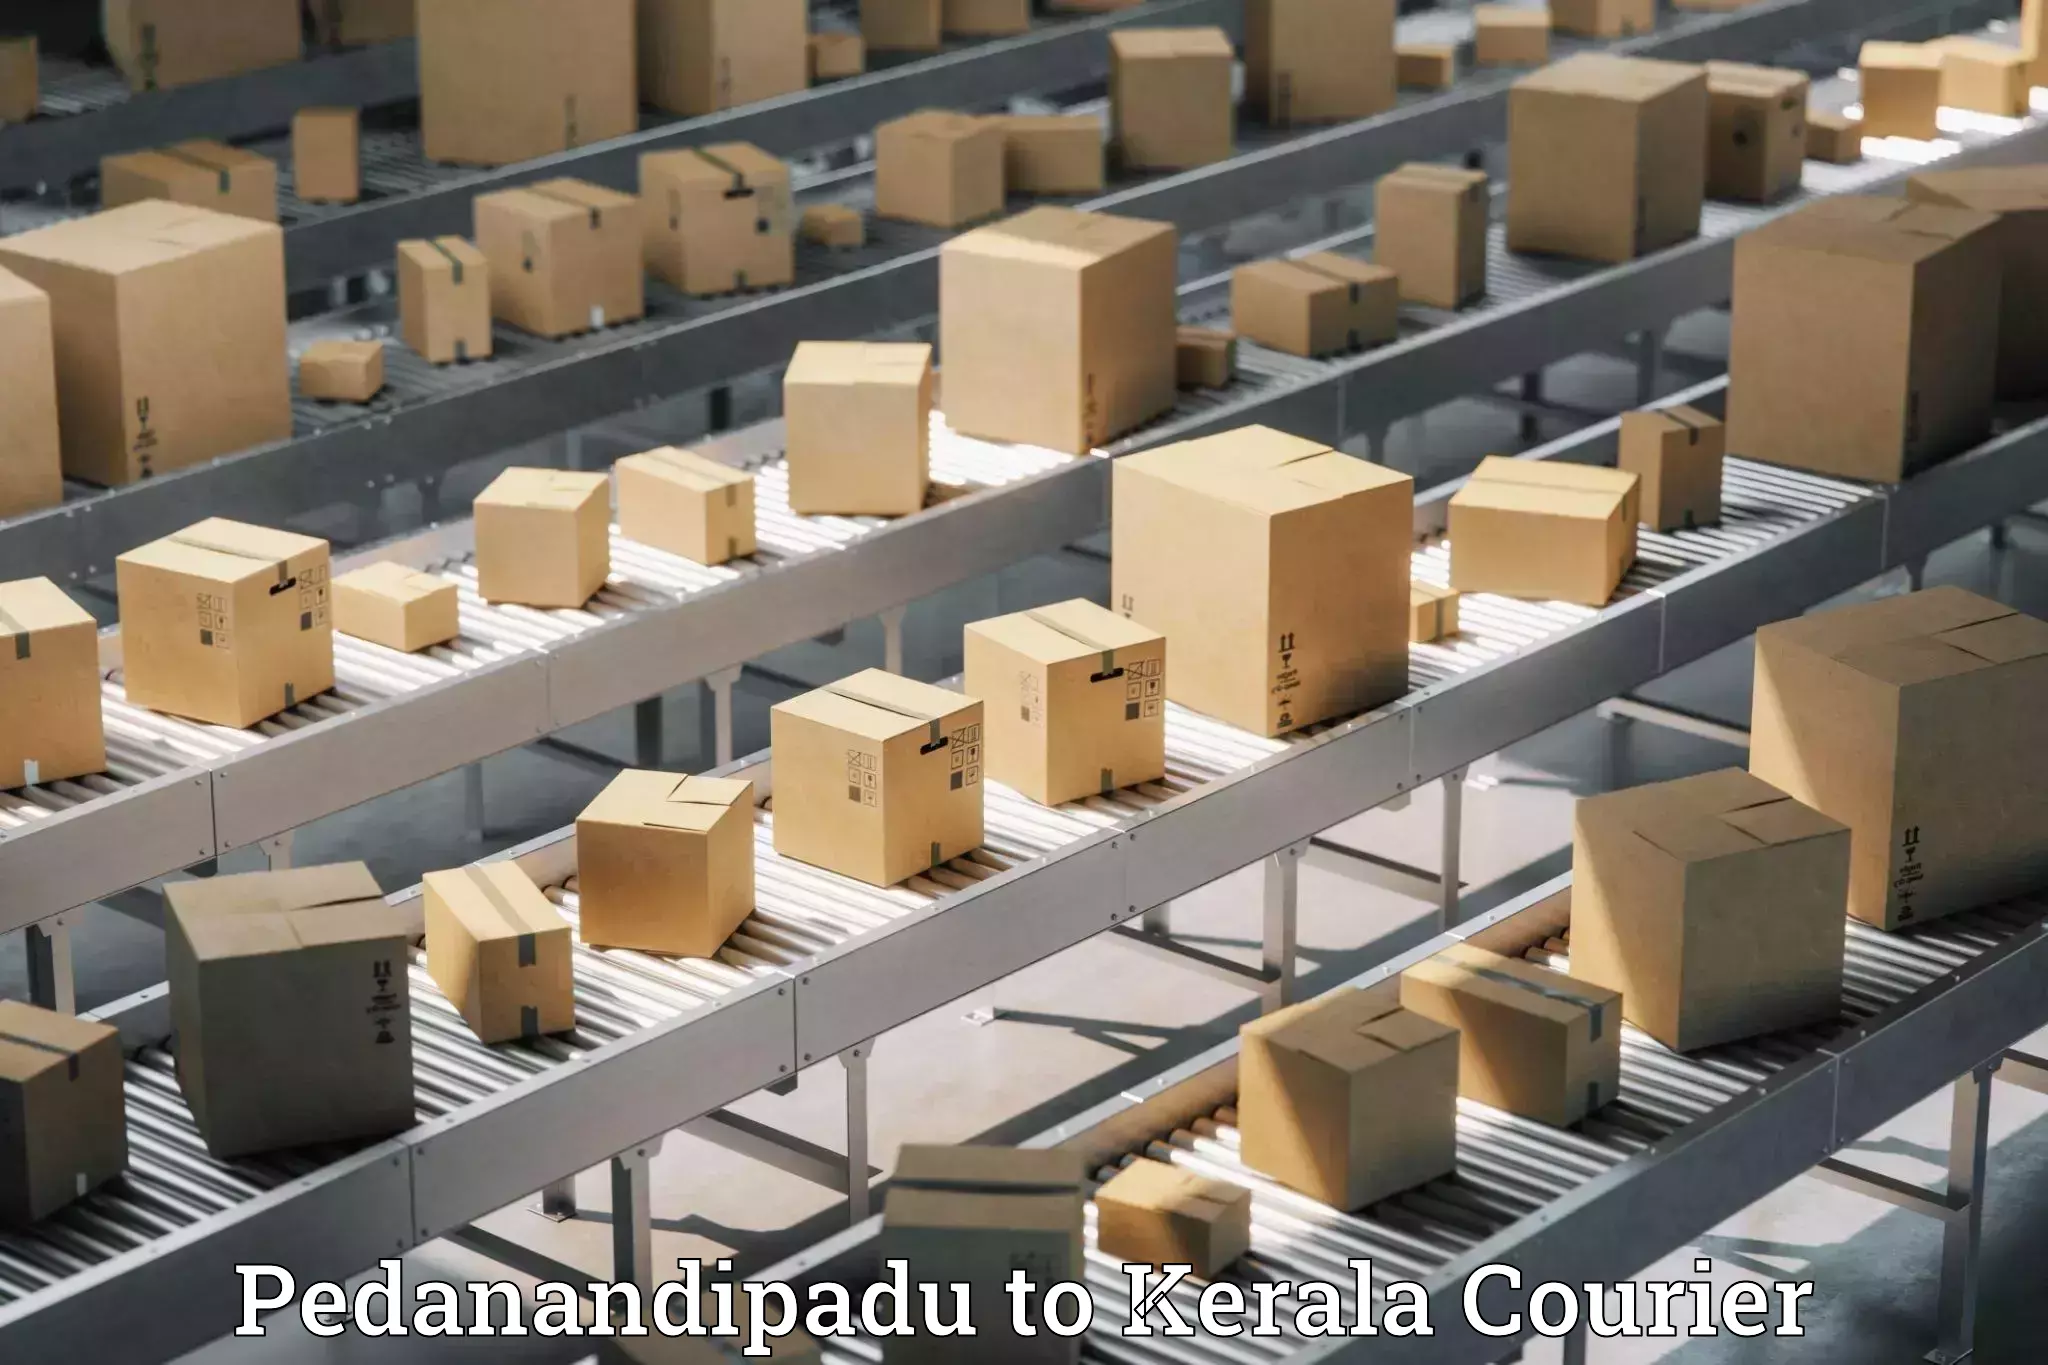 Reliable package handling in Pedanandipadu to Taliparamba